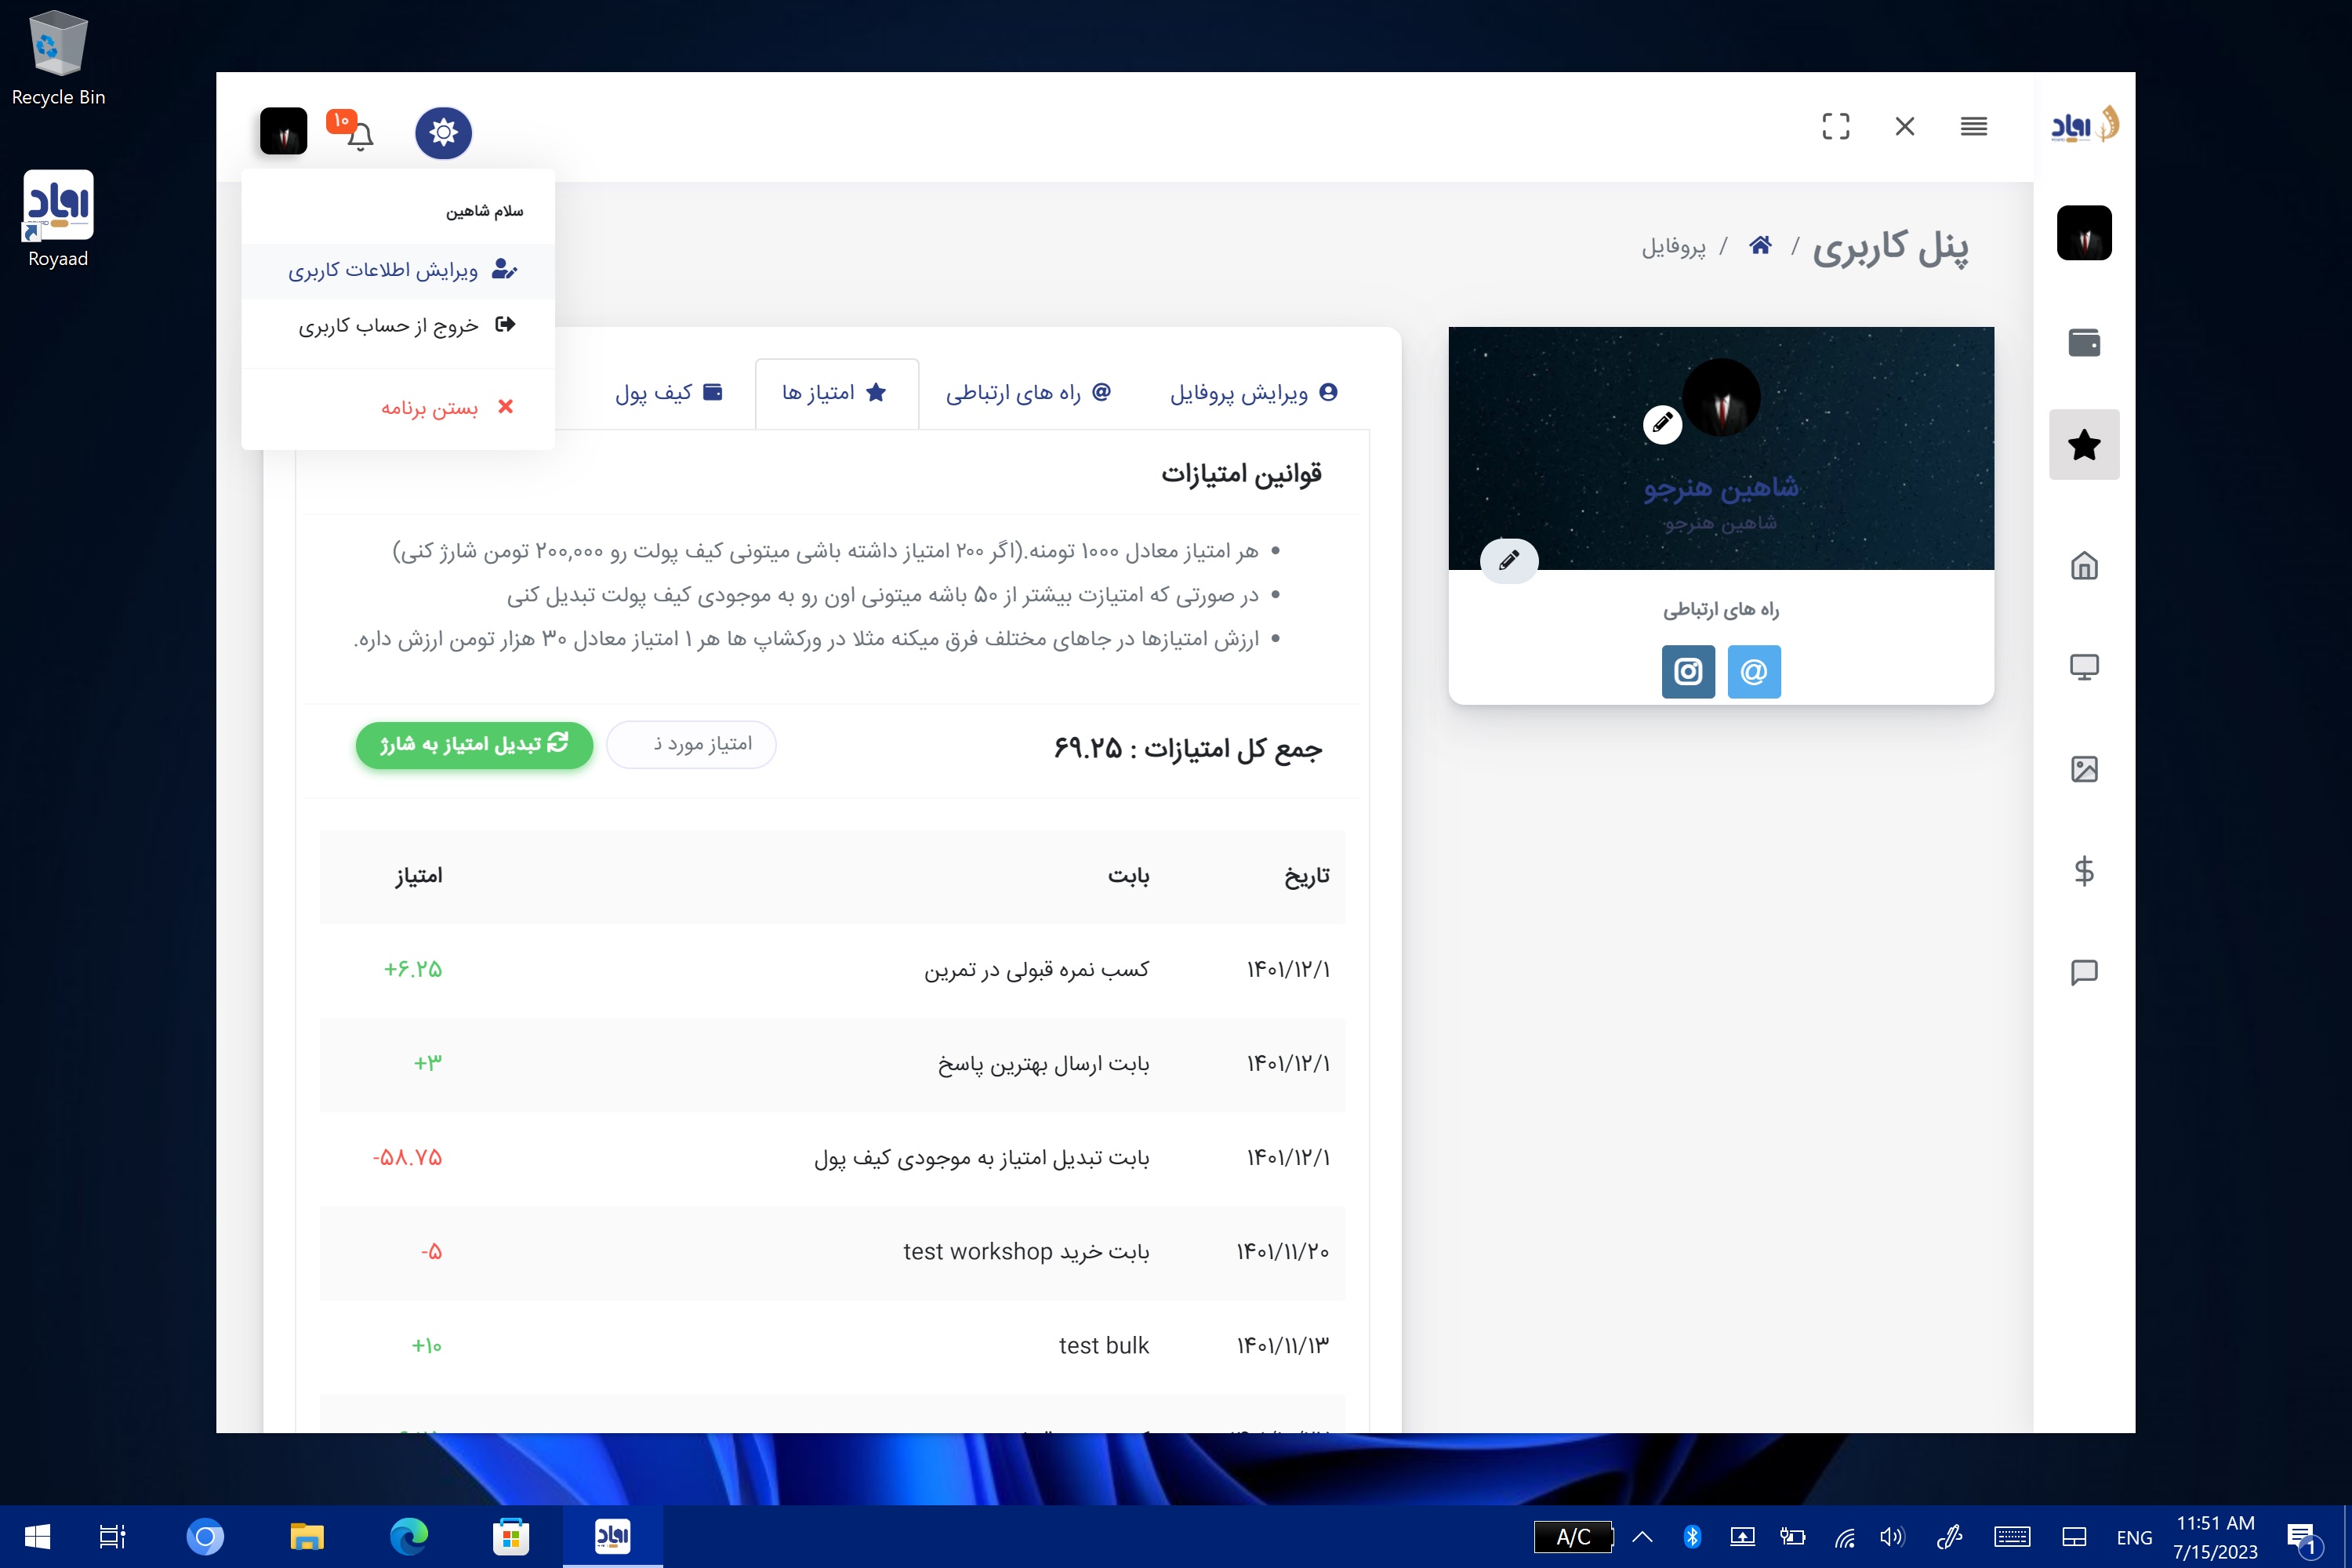 Shahinsoft.ir Royaad desktop application Menu